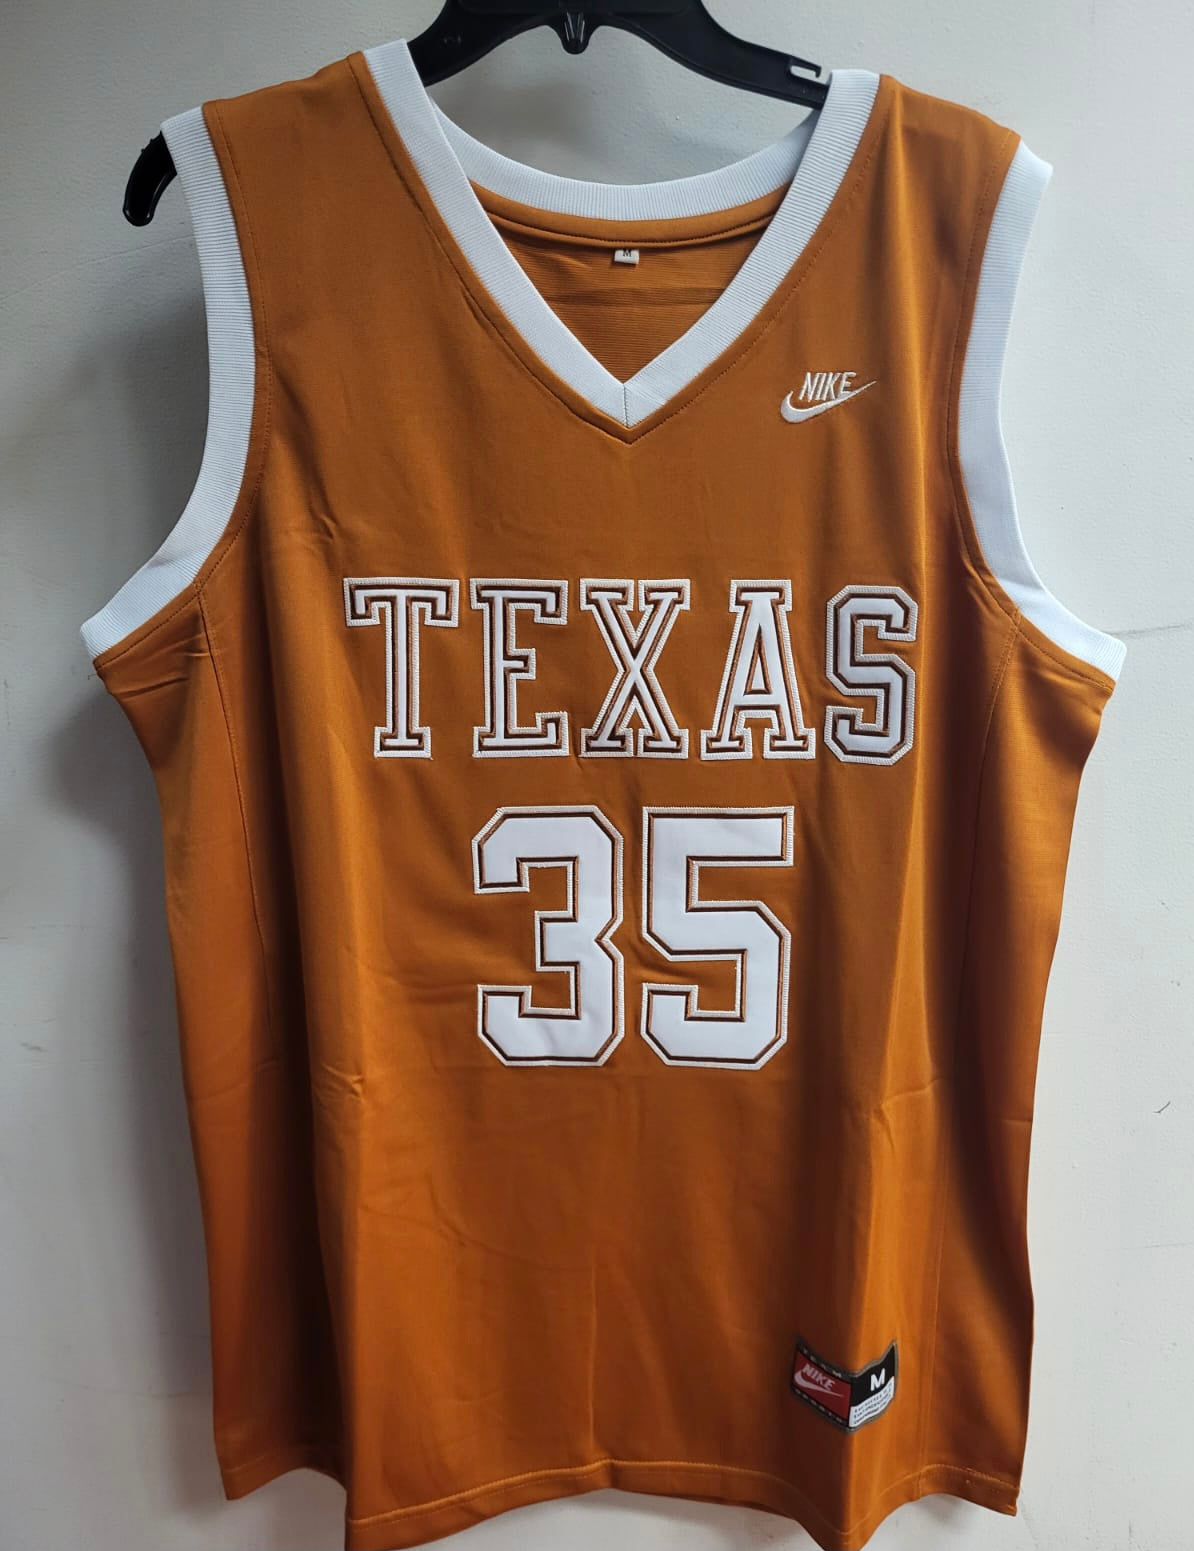 Men's Nike Kevin Durant Texas Orange Texas Longhorns Alumni Limited Basketball Jersey, Size: XL